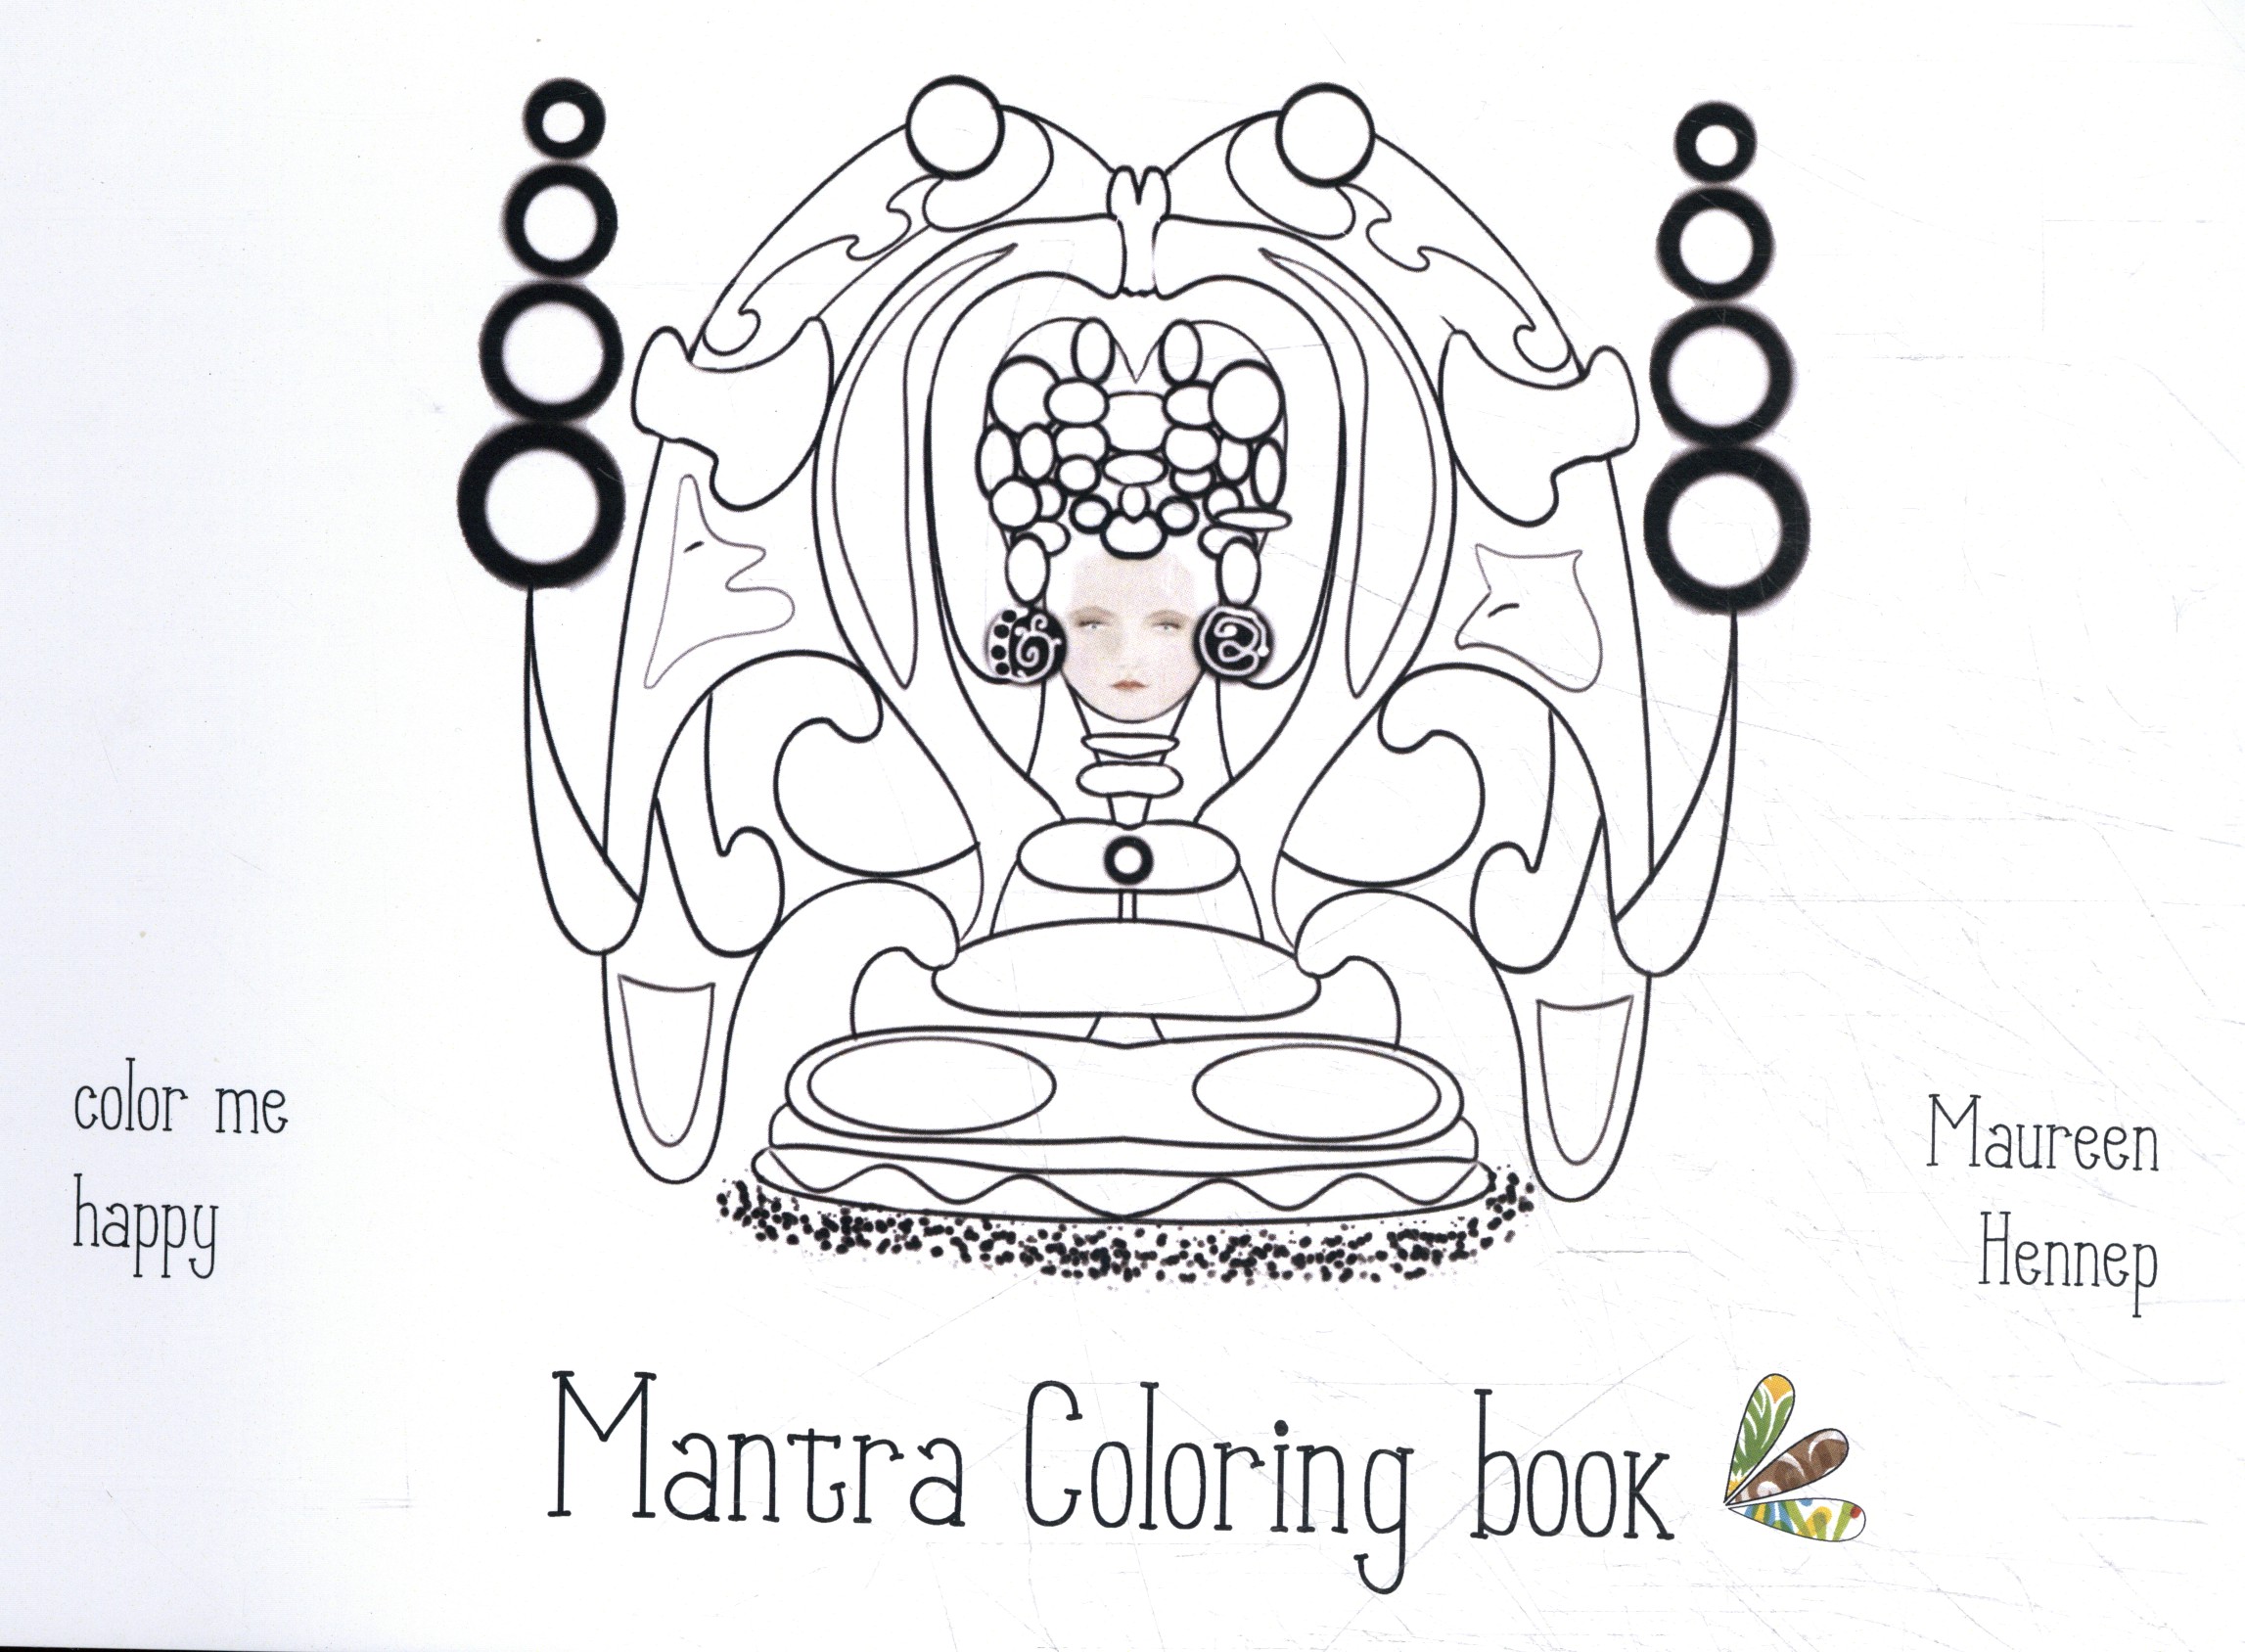 Mantra Coloring book